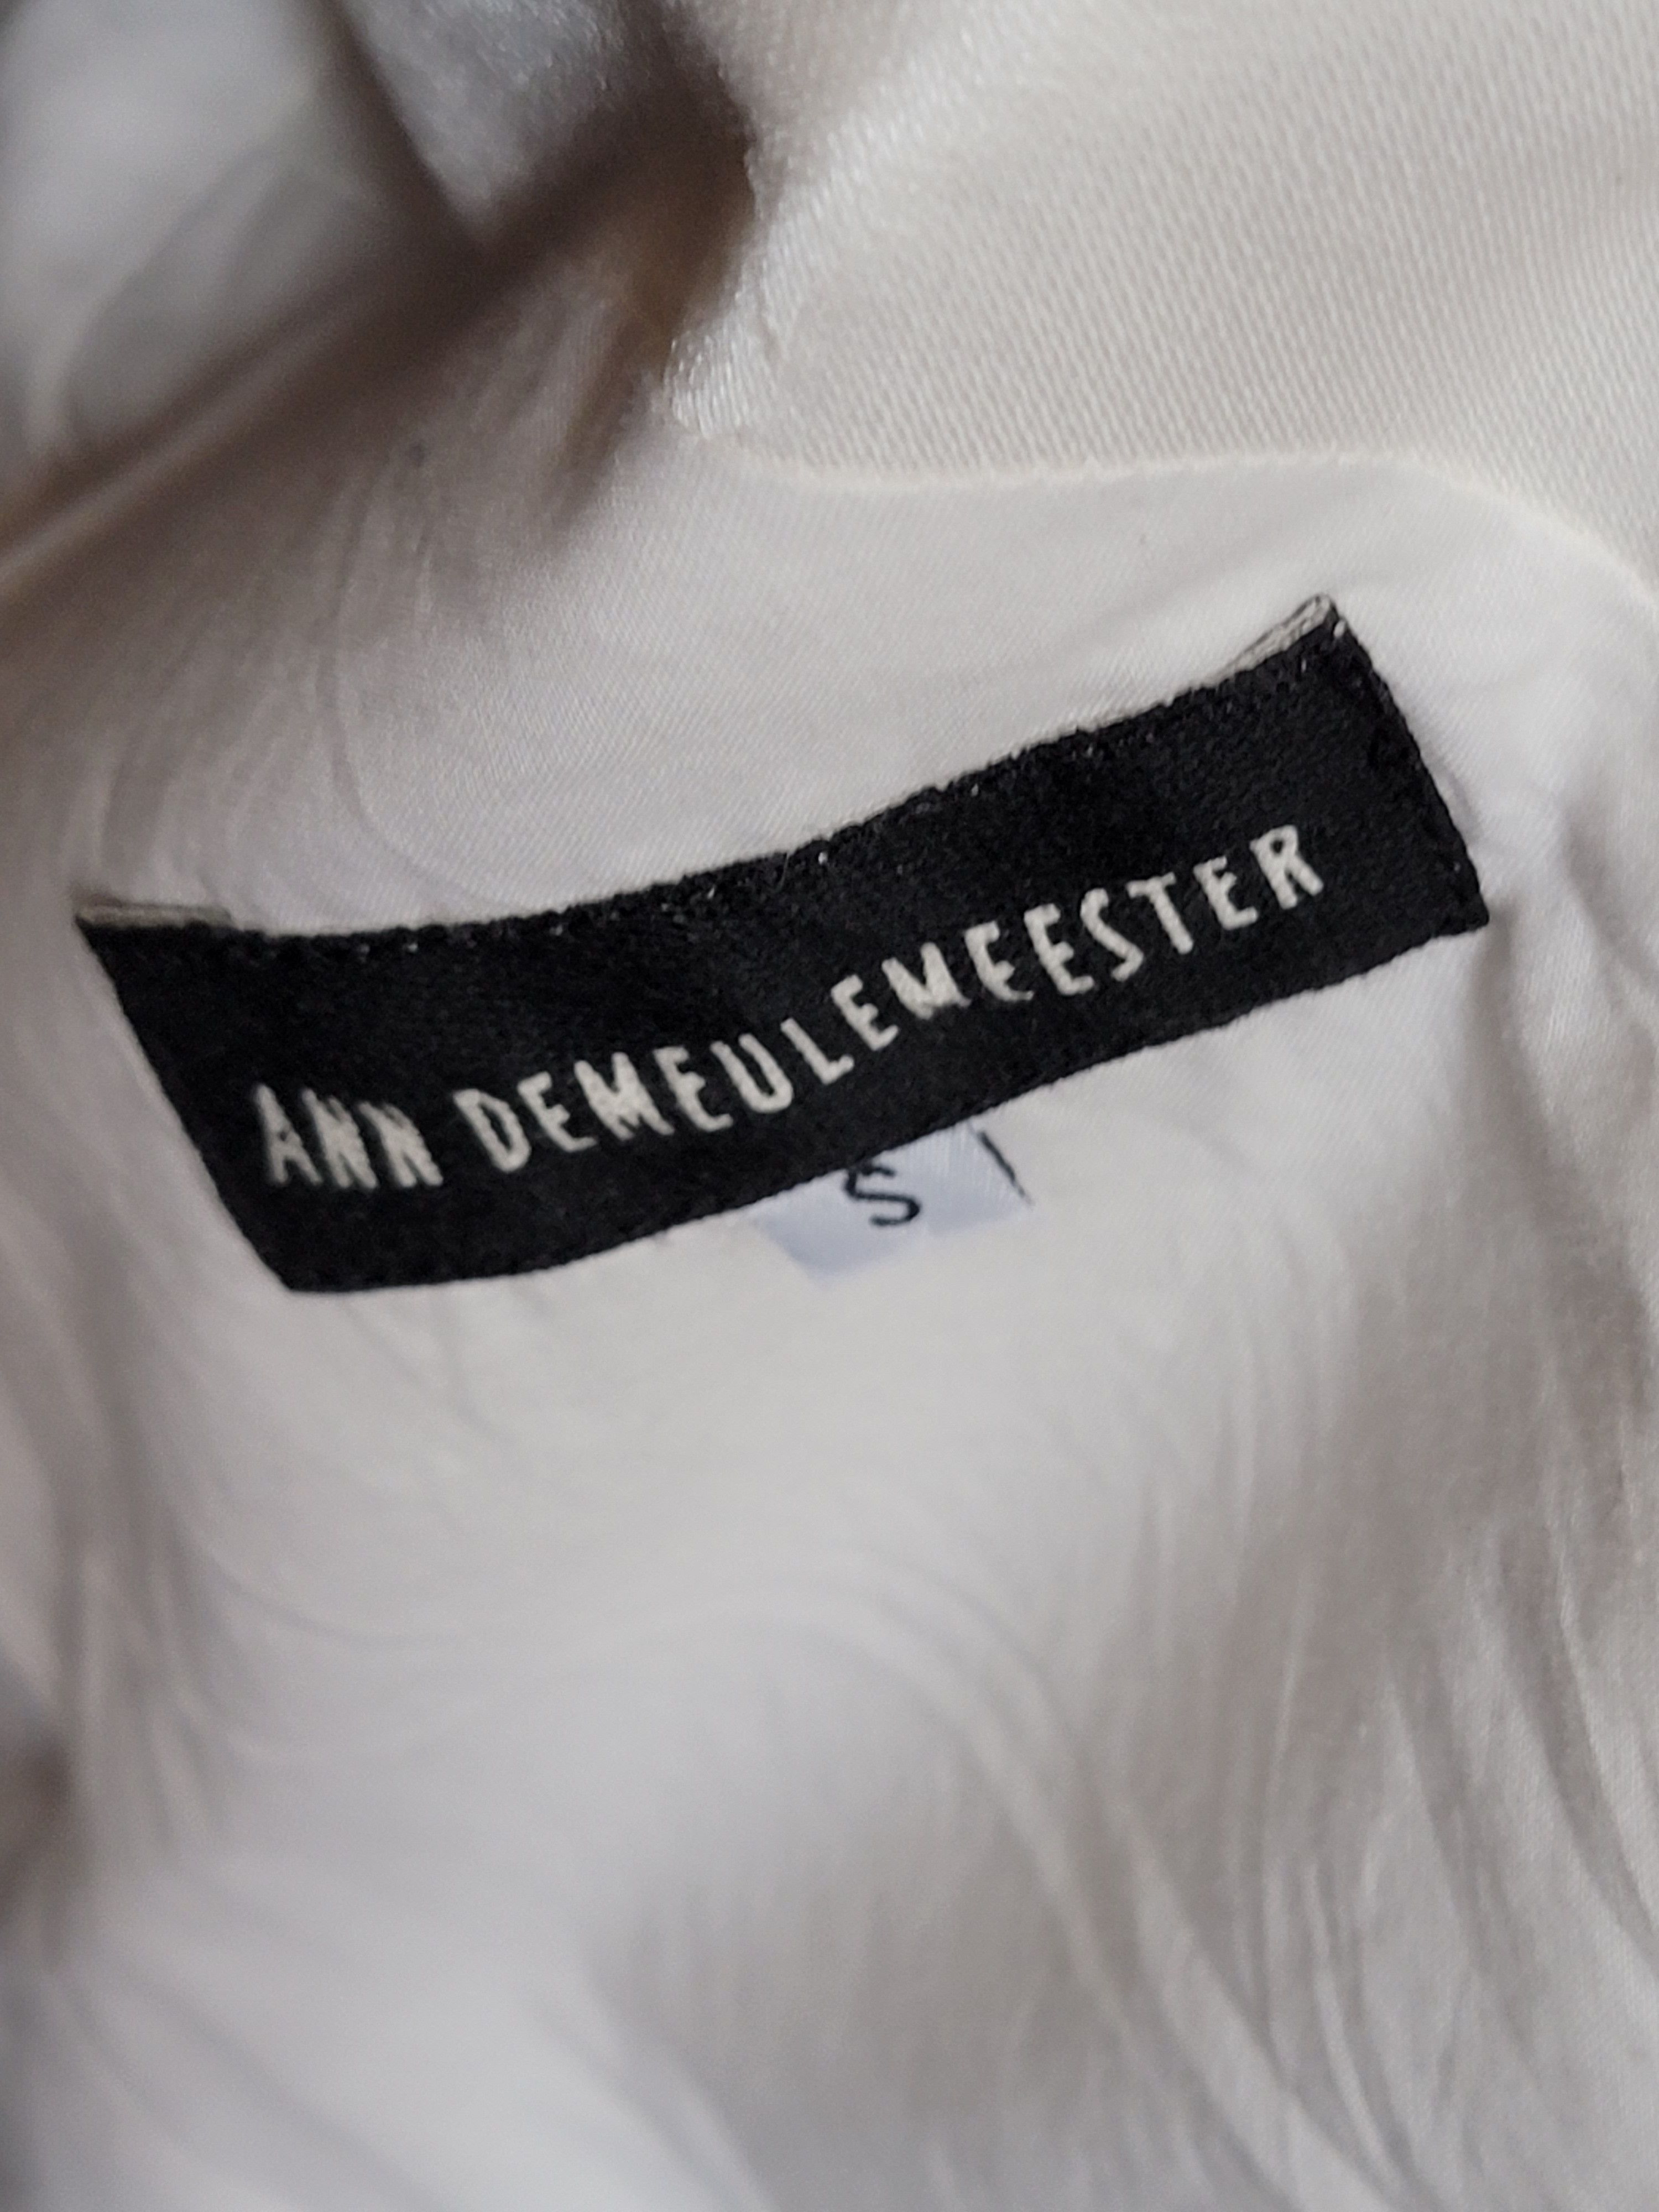 Ann Demeulemeester SS 2011 Ann D white silk cotton blazer size S Size 38R - 7 Thumbnail